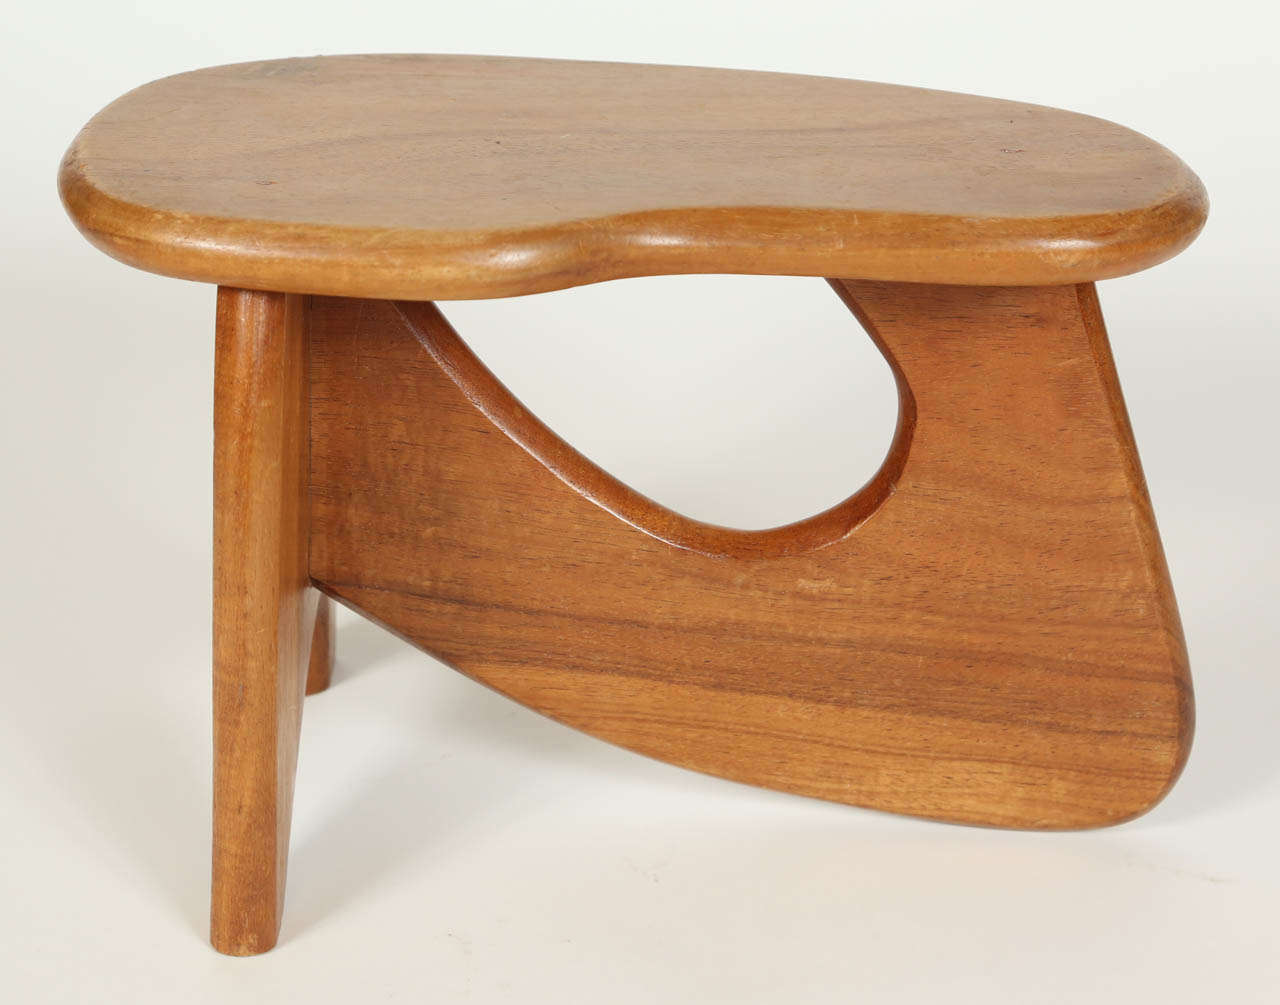 Maple stool in the manner of Isamu Noguchi c.1950.